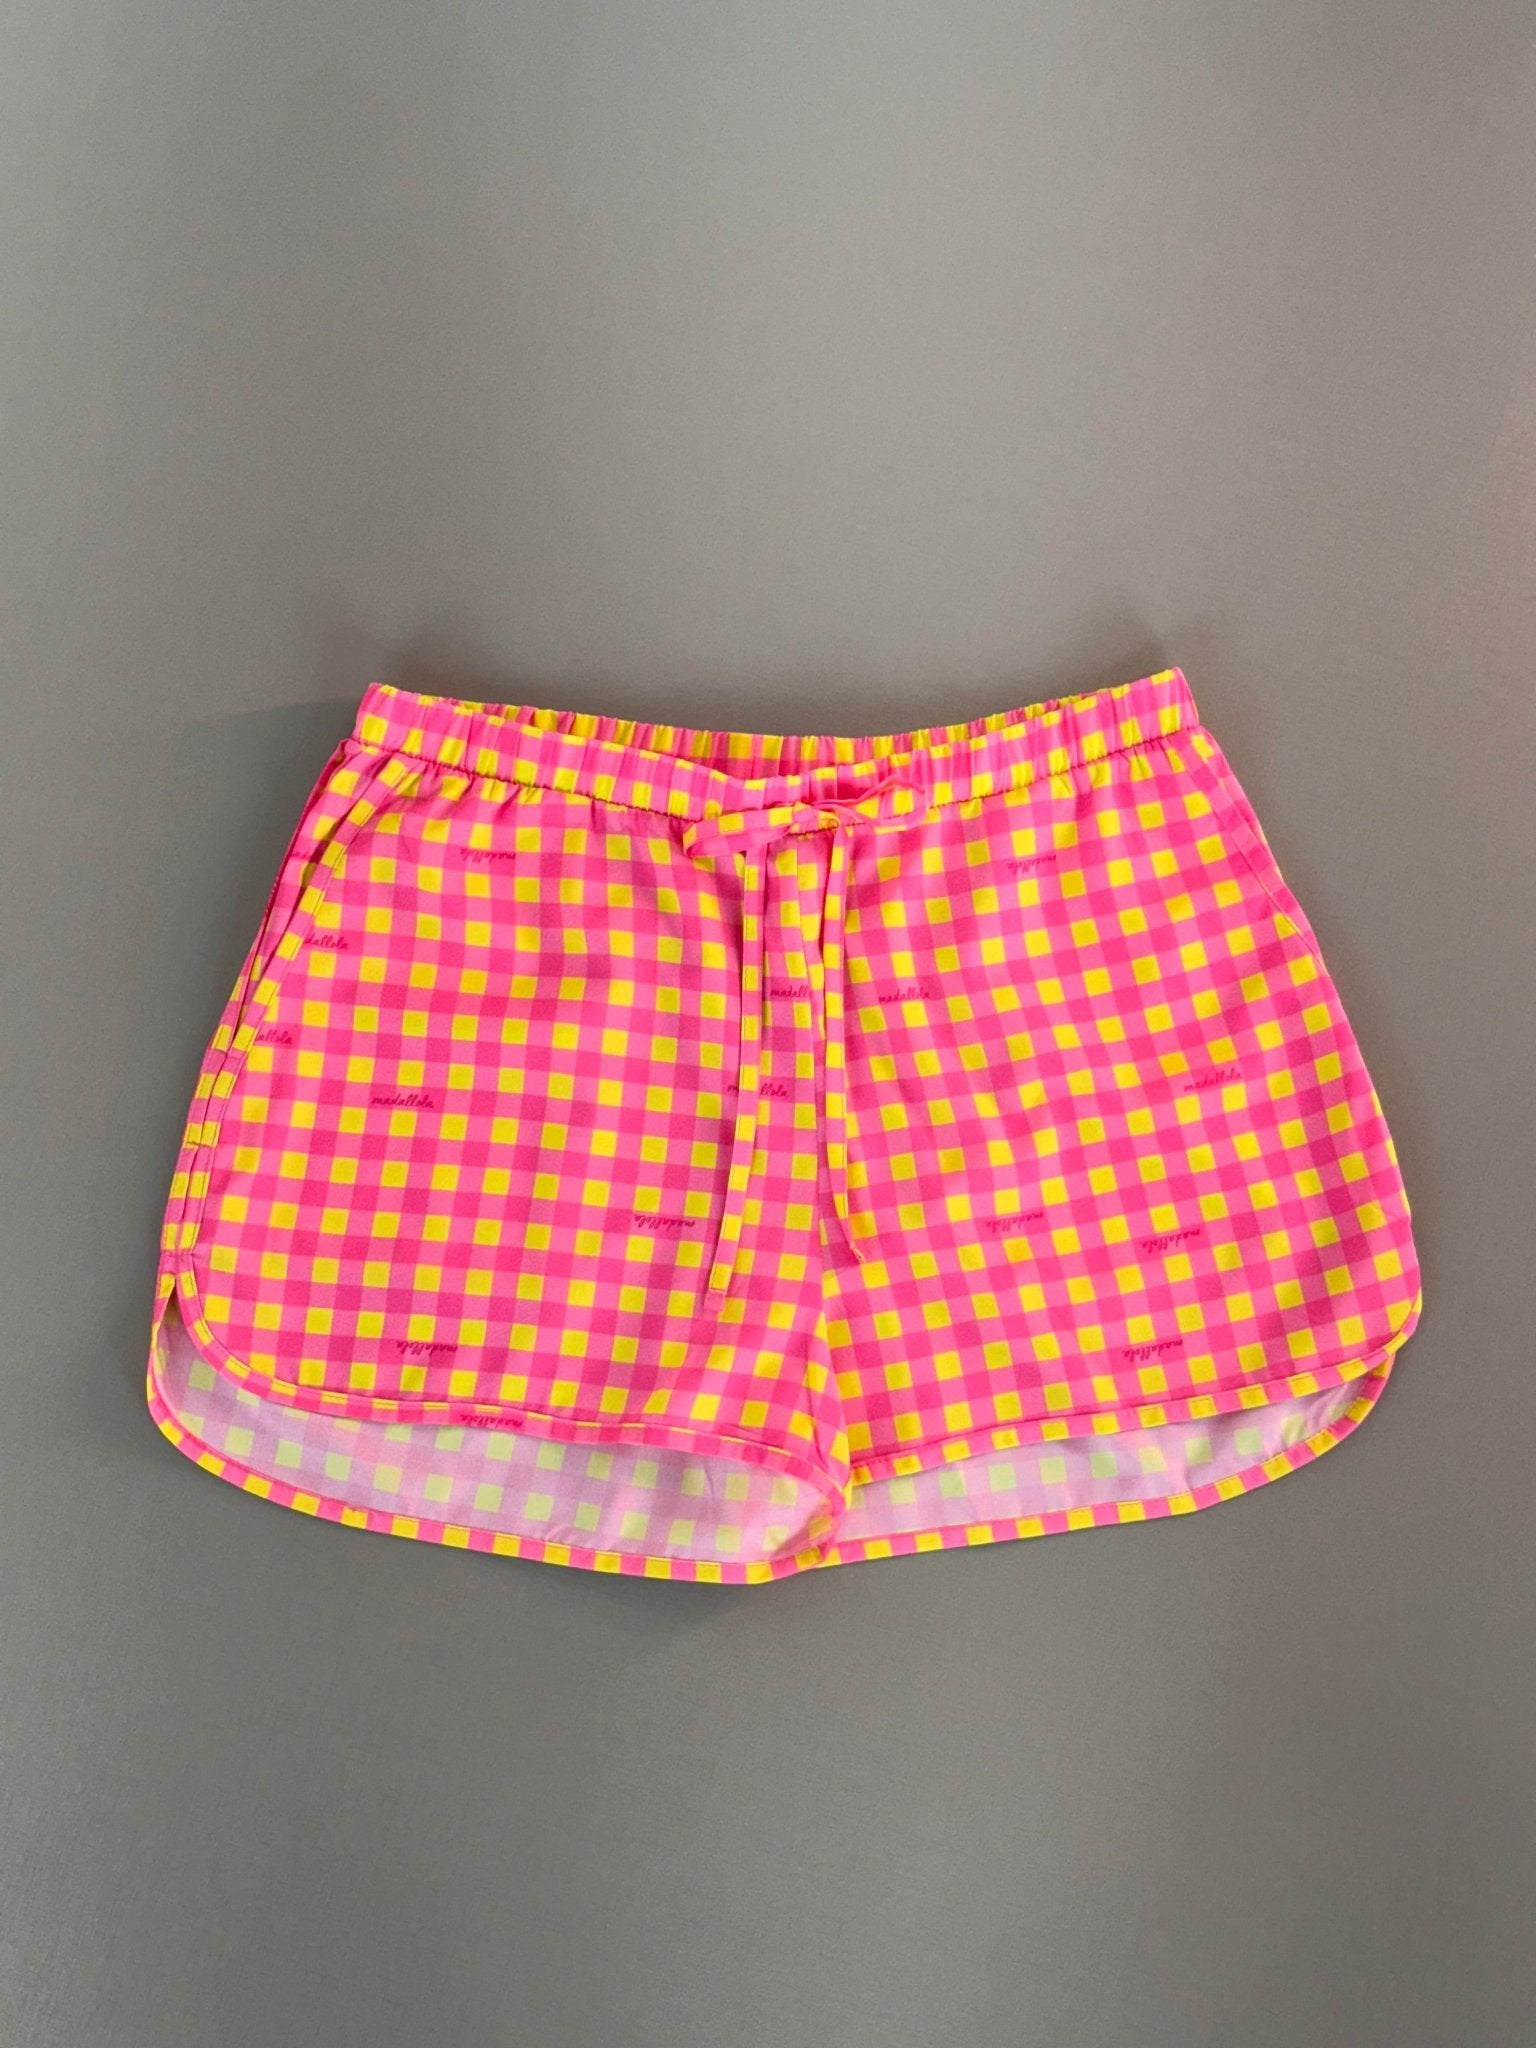 Shorts Curto Com Elástico Xadrez Pink Com Amarelo 1075 - MADALLOLA